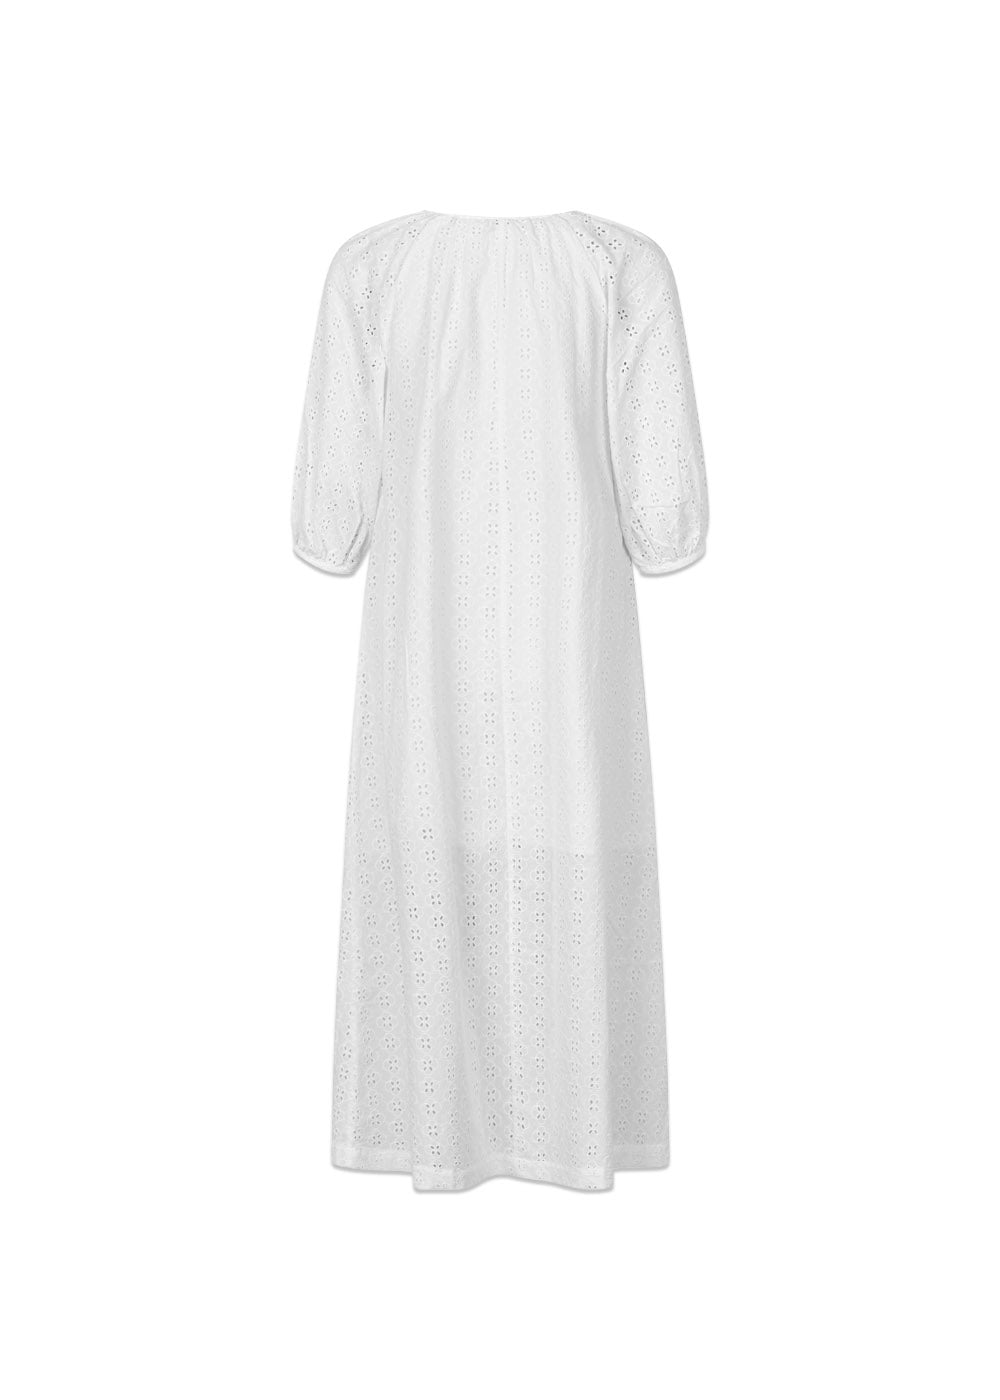 IrsaMD dress - Soft White